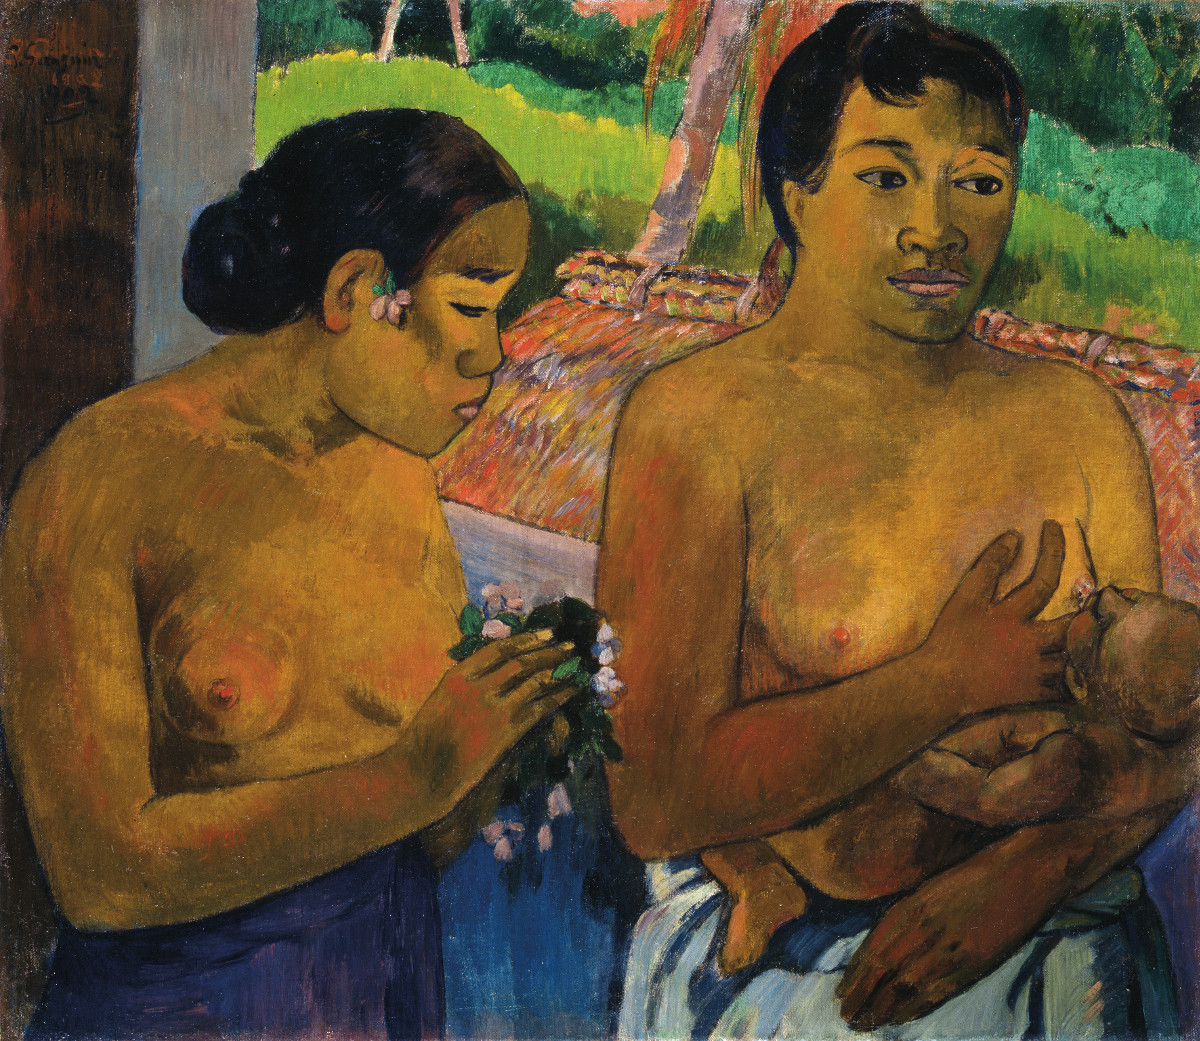 Paul Gauguin, 